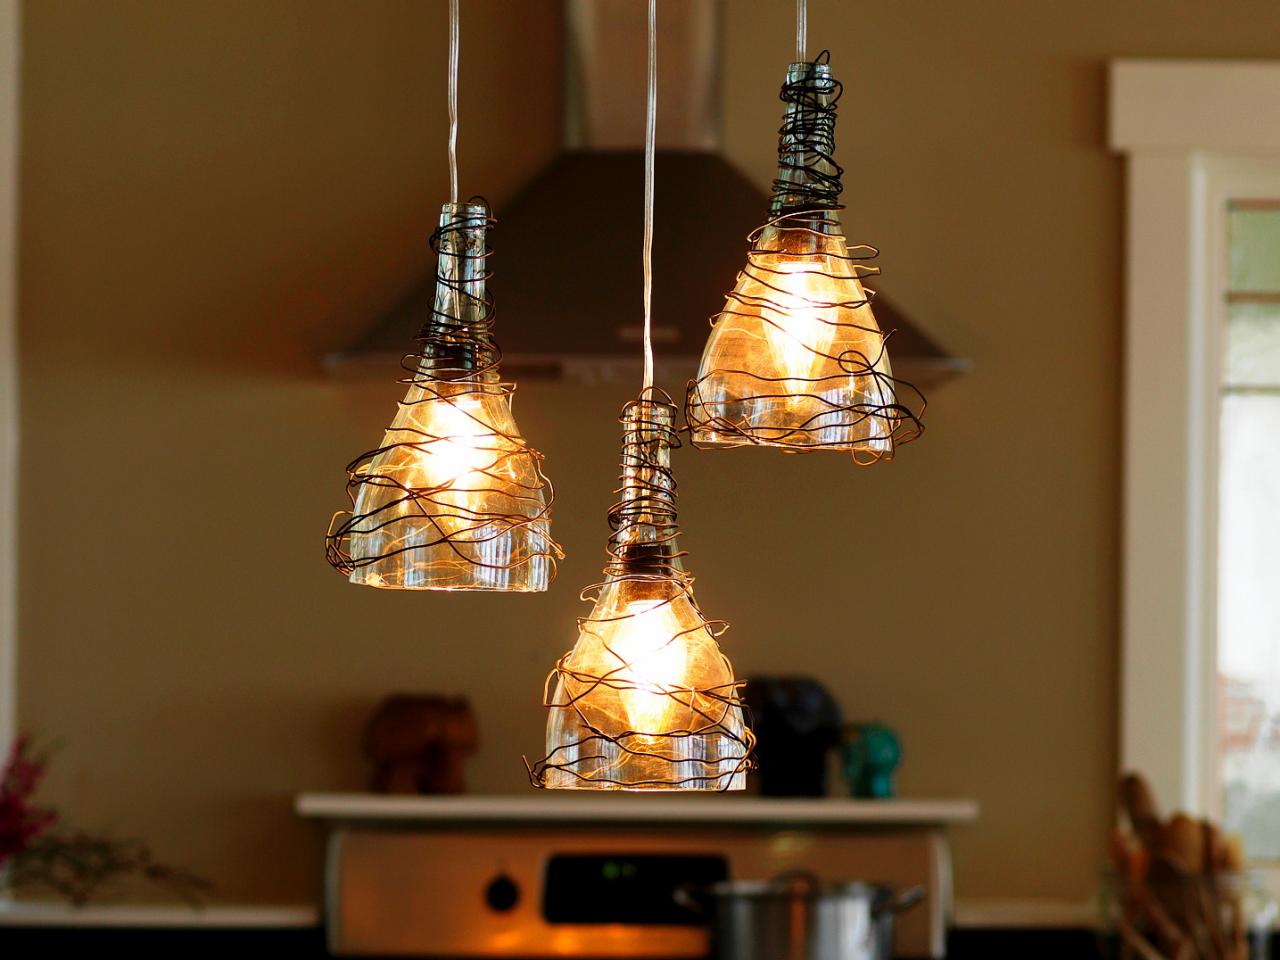 wine bottle kitchen pendant light